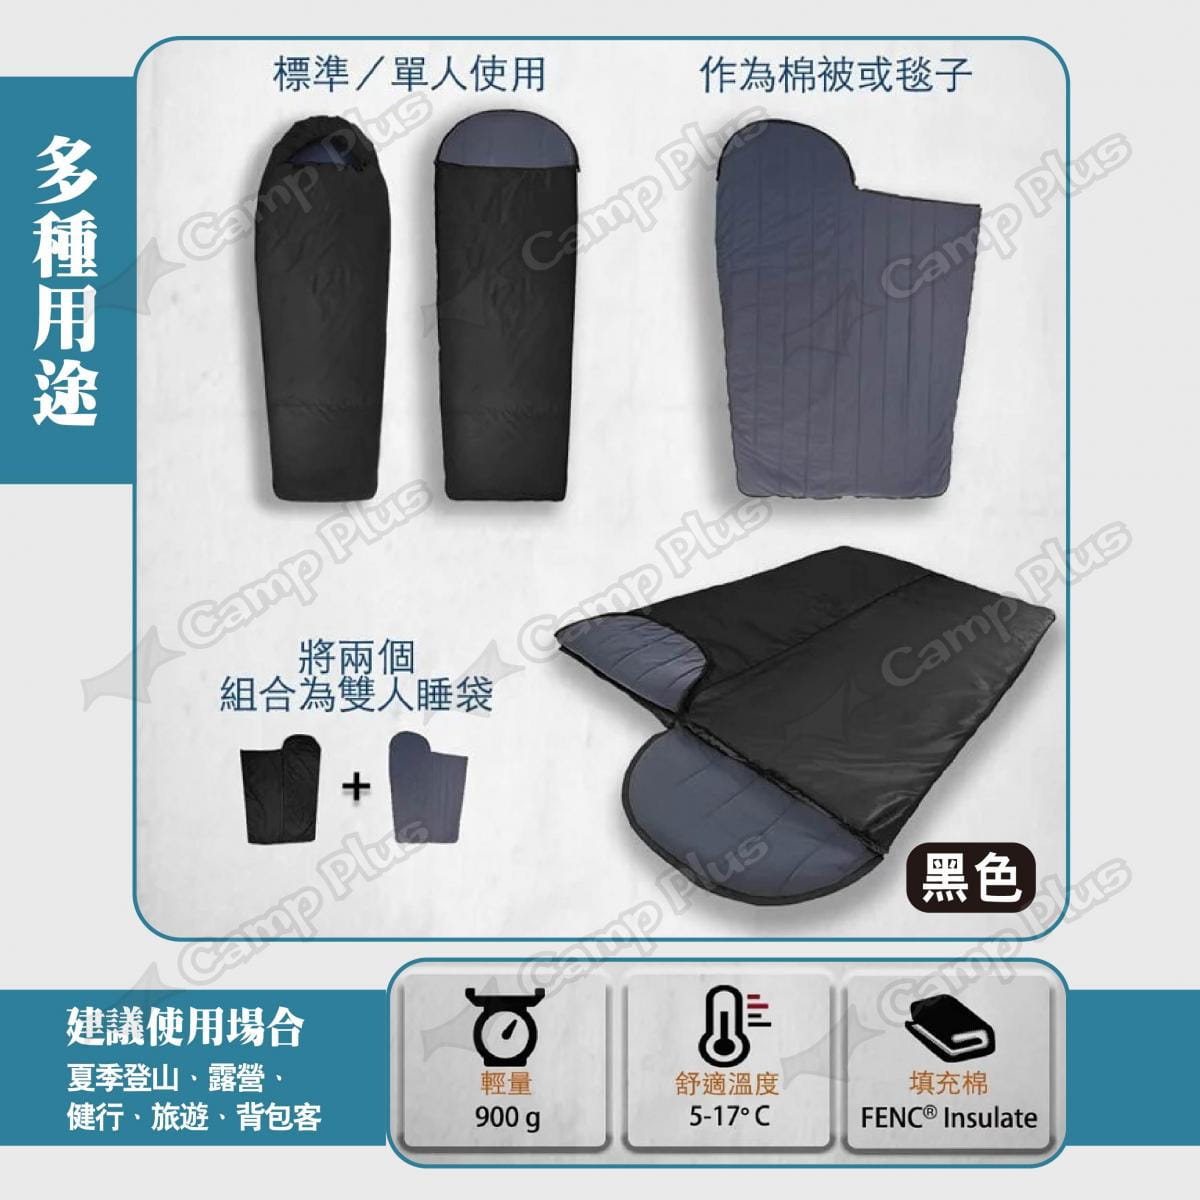 【LITUME】意都美 FENC® Insulate科技棉睡袋 C065 悠遊戶外 2